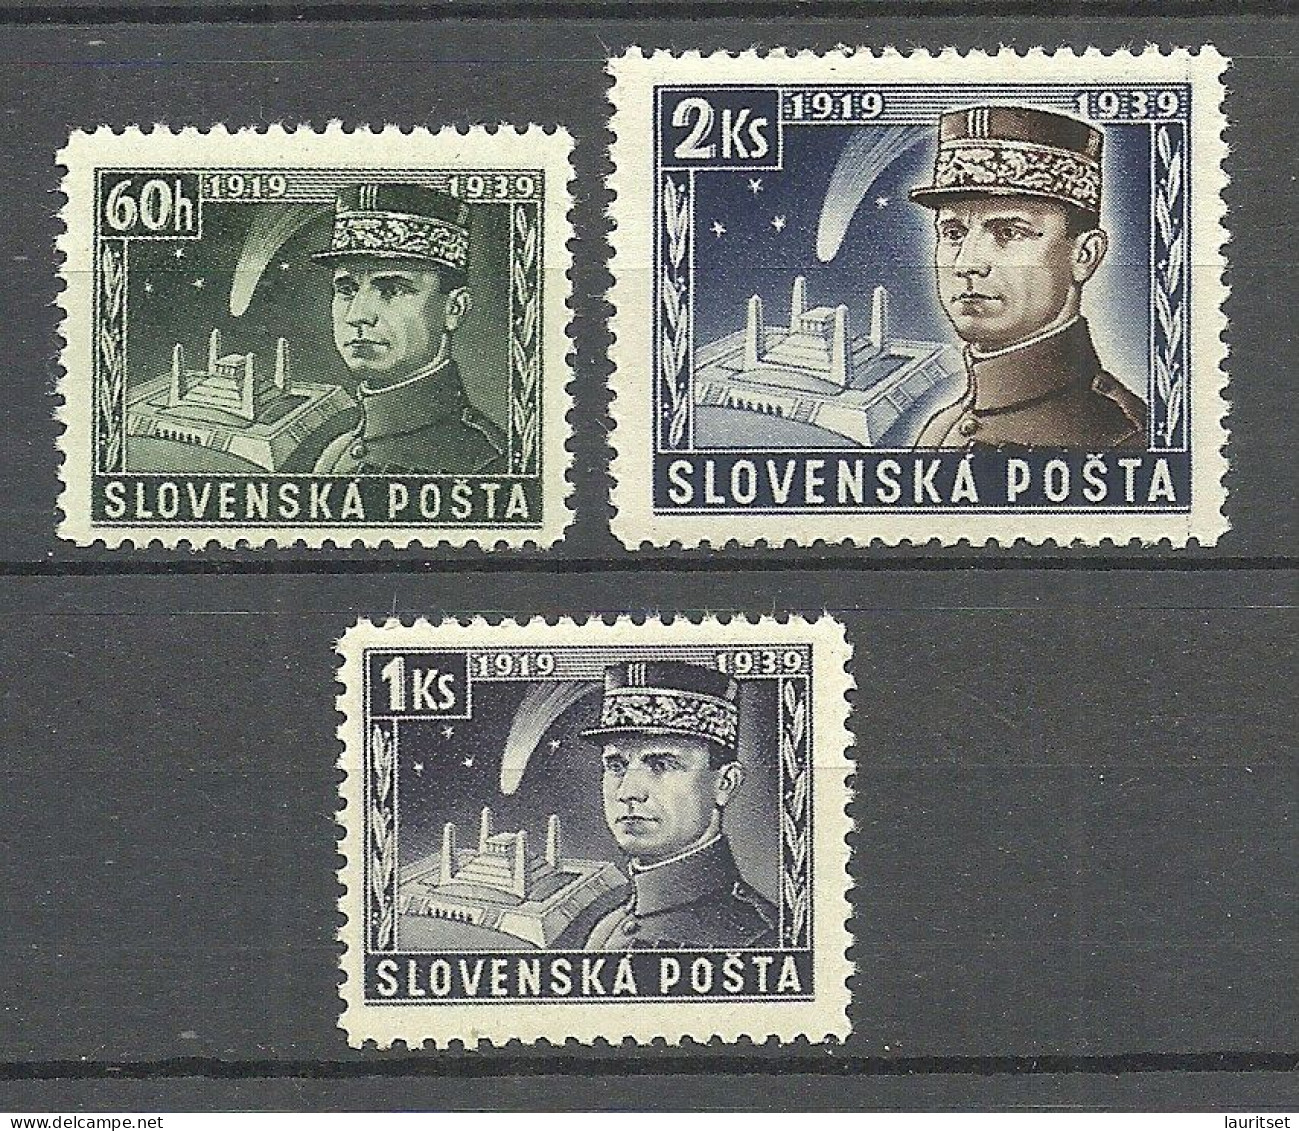 SLOVAKIA Slowakei 1939 Michel II - IV MNH Nicht Augegebene Marken / Unissued Stamps - Nuevos